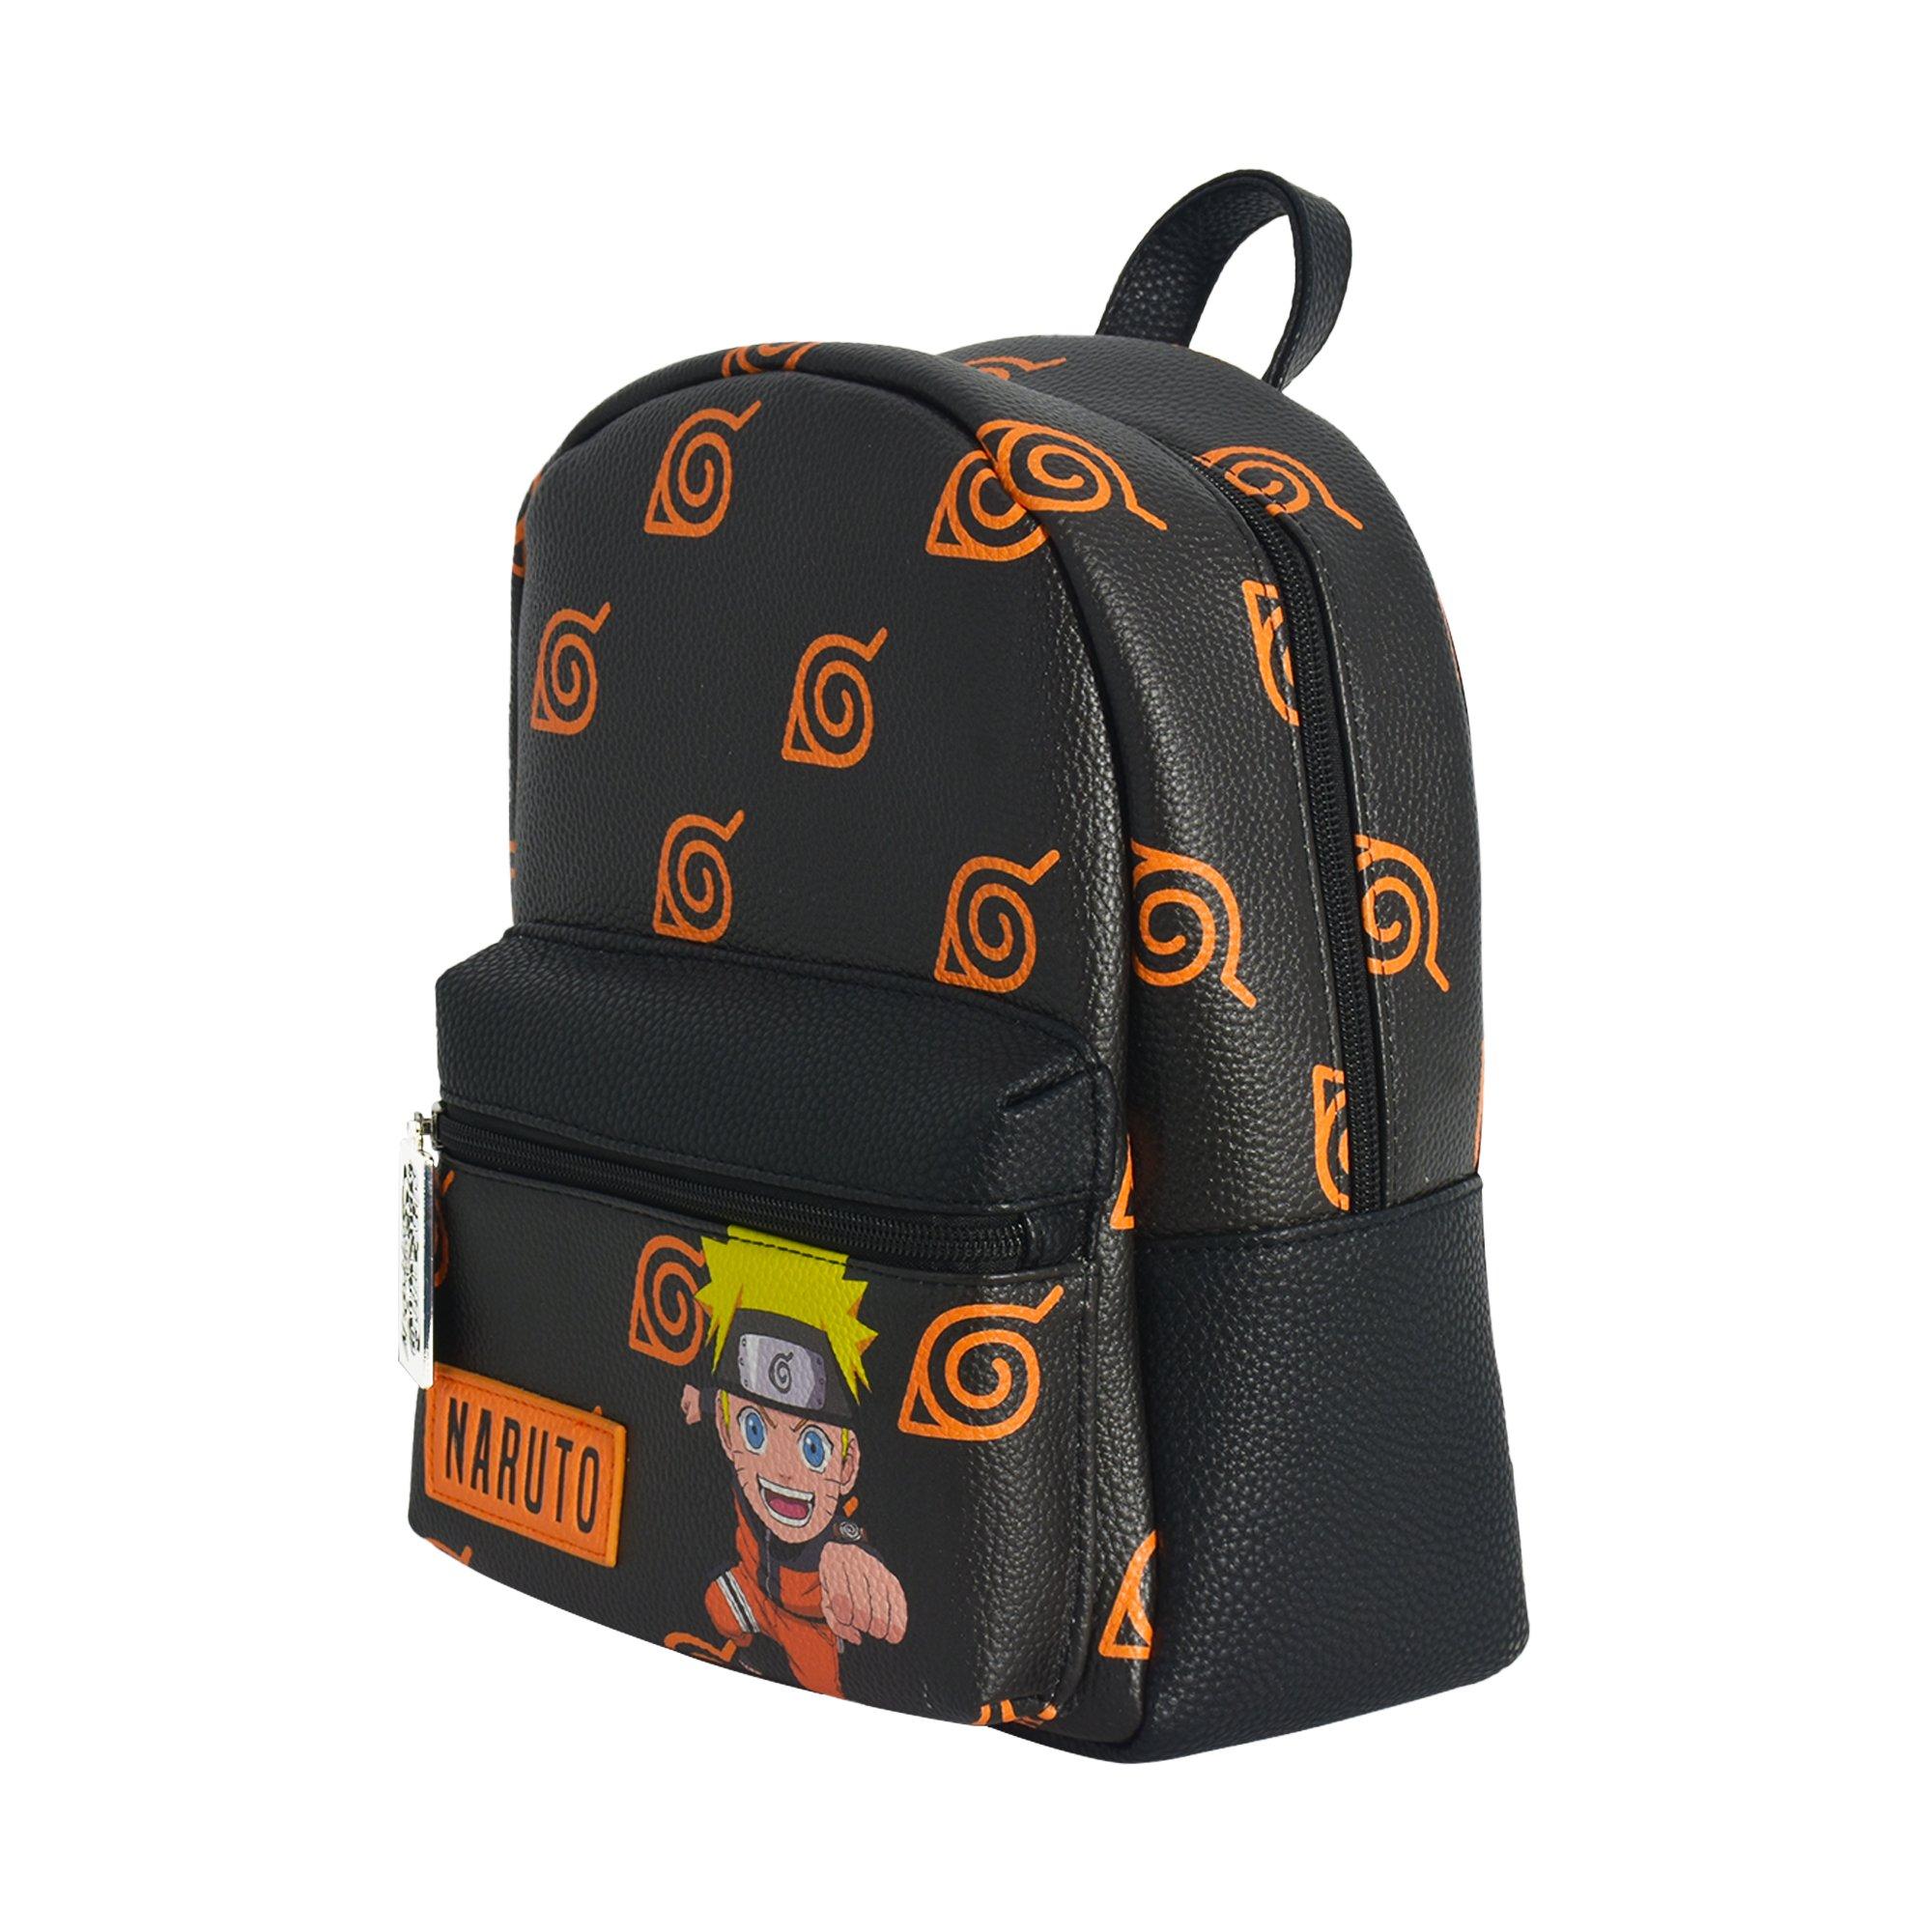 Naruto Chibi Mini Backpack